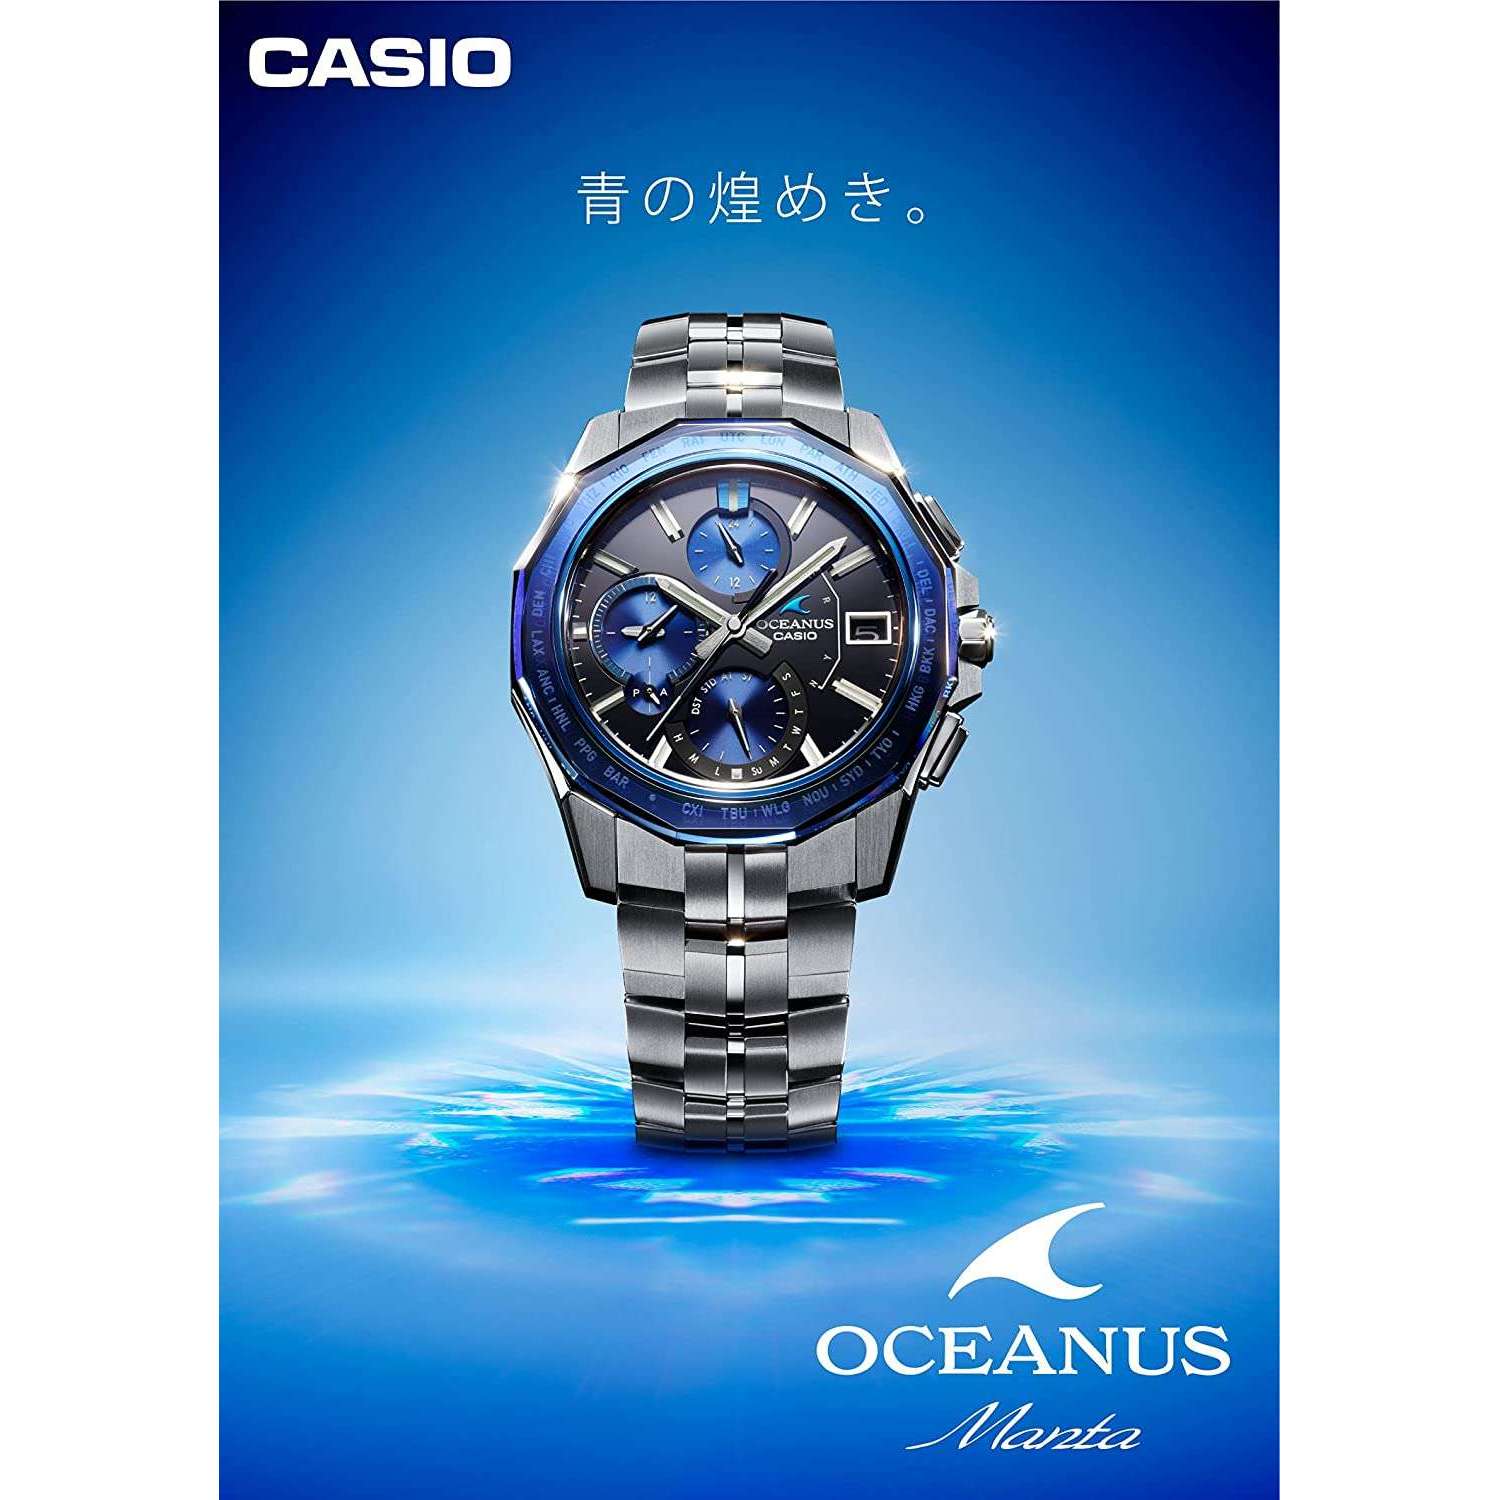 ROOK JAPAN:CASIO OCEANUS MANTA JDM MEN WATCH OCW-S6000-1AJF,JDM Watch,Casio Oceanus